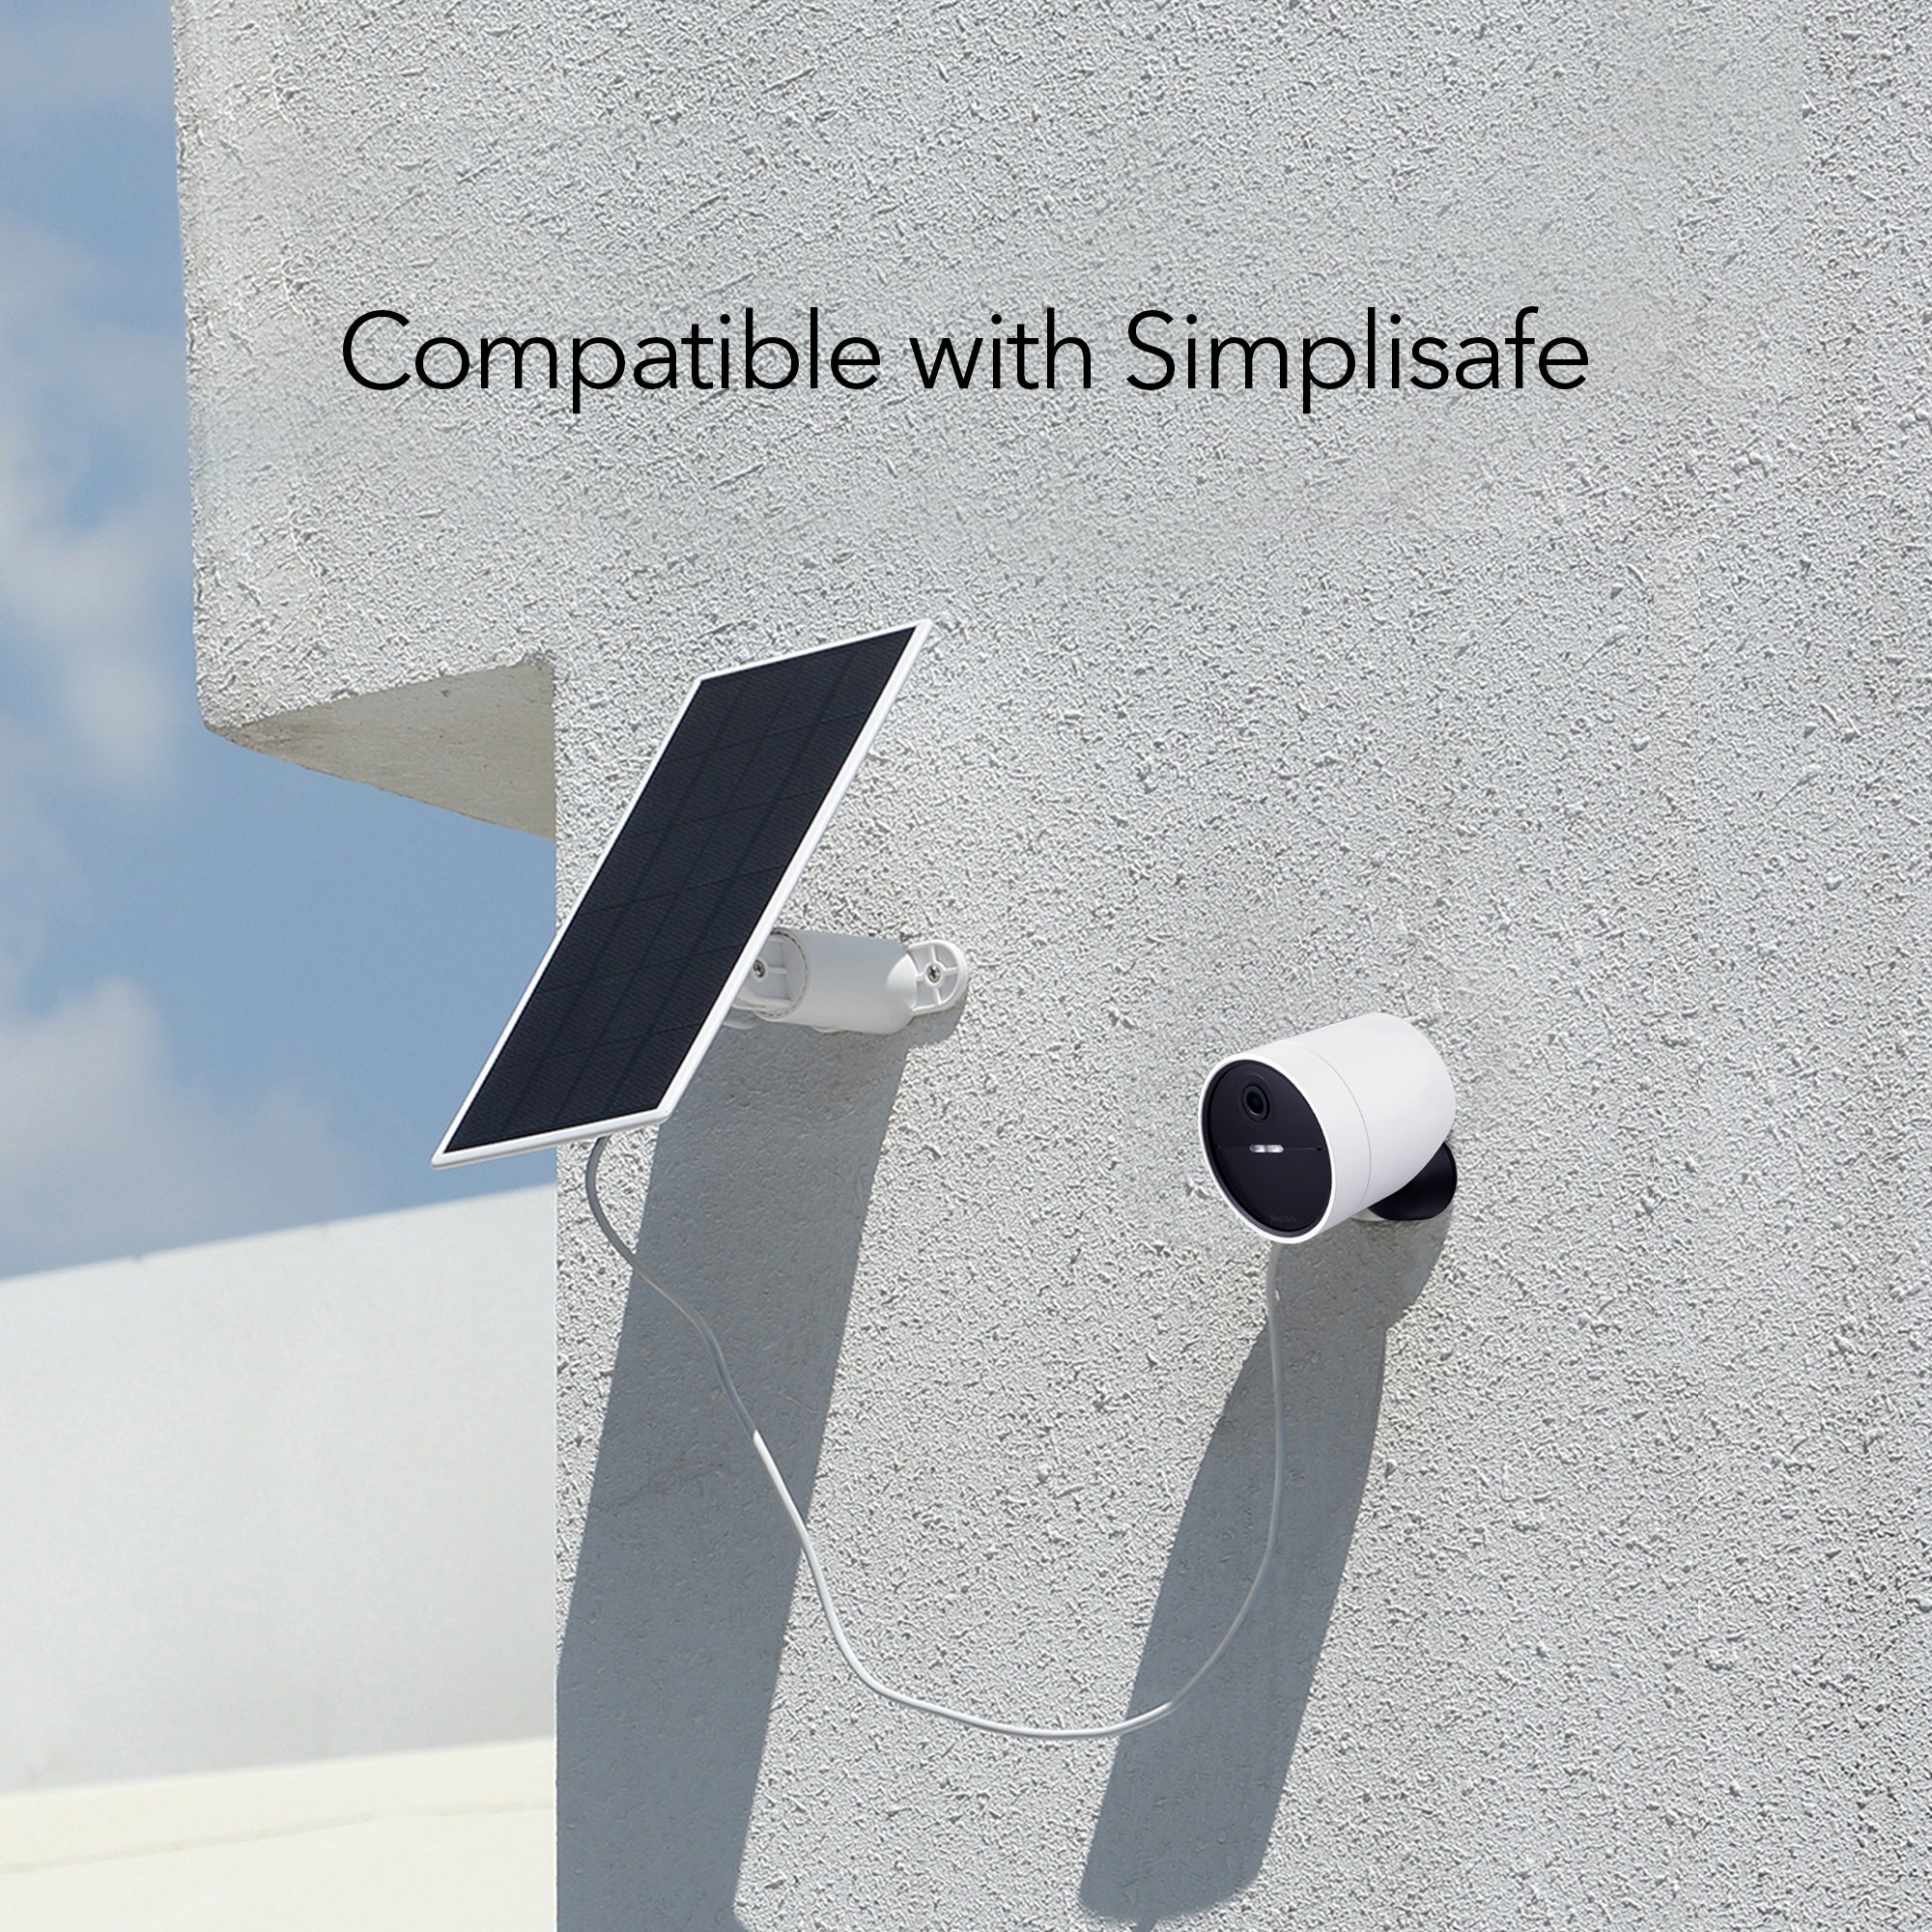 Wasserstein Solar Panel for Simplisafe Wireless Outdoor Security Cam